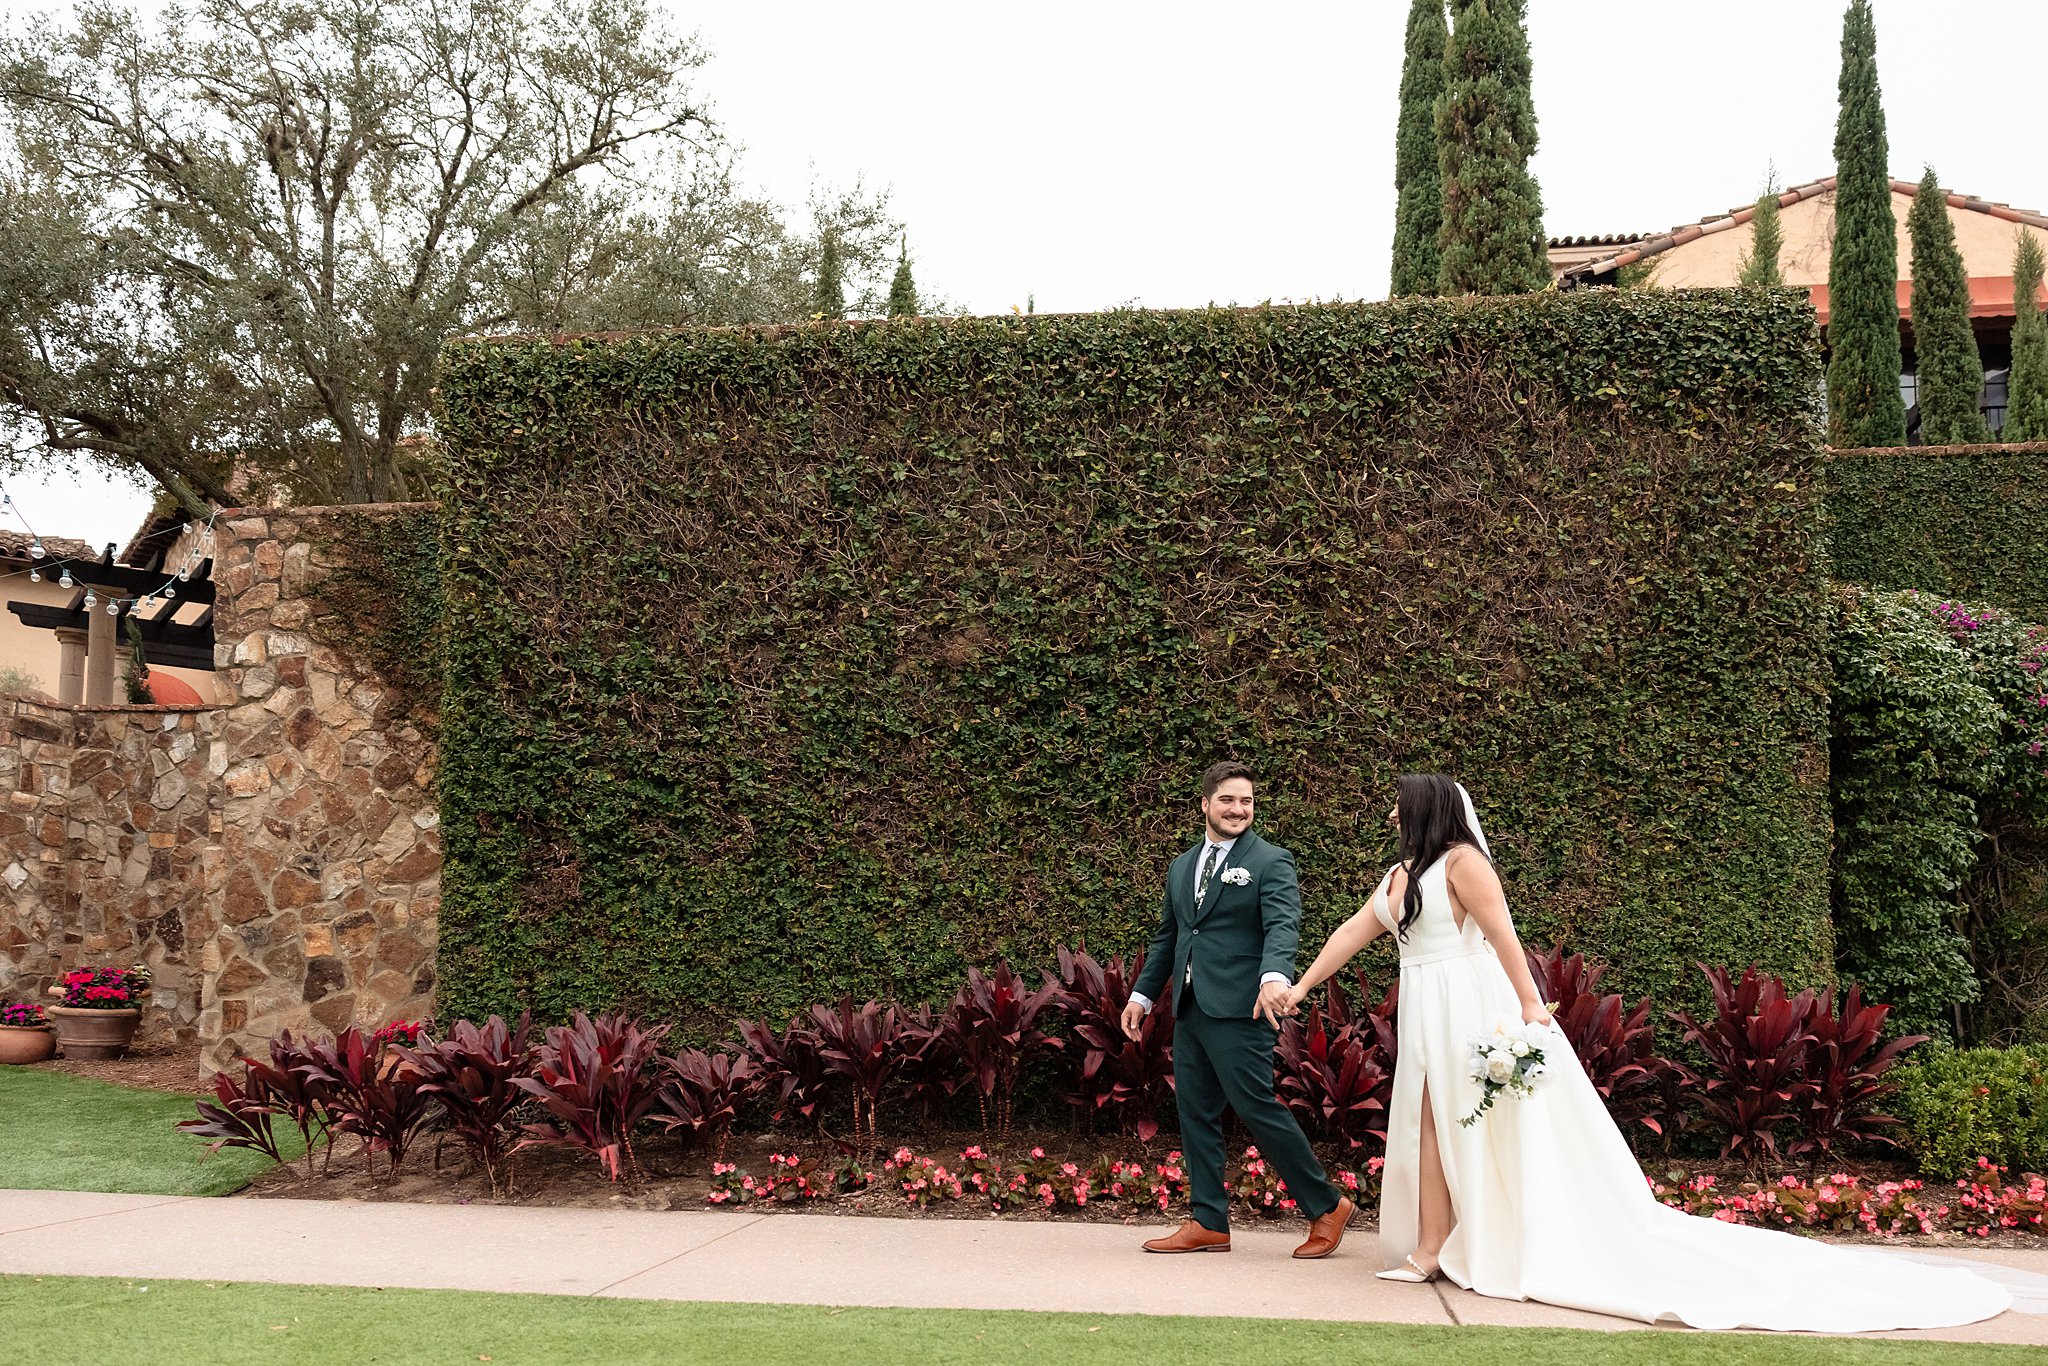 Newlyweds walk down a sidewalk through a garden and an ivy wall holding hands at their wedding